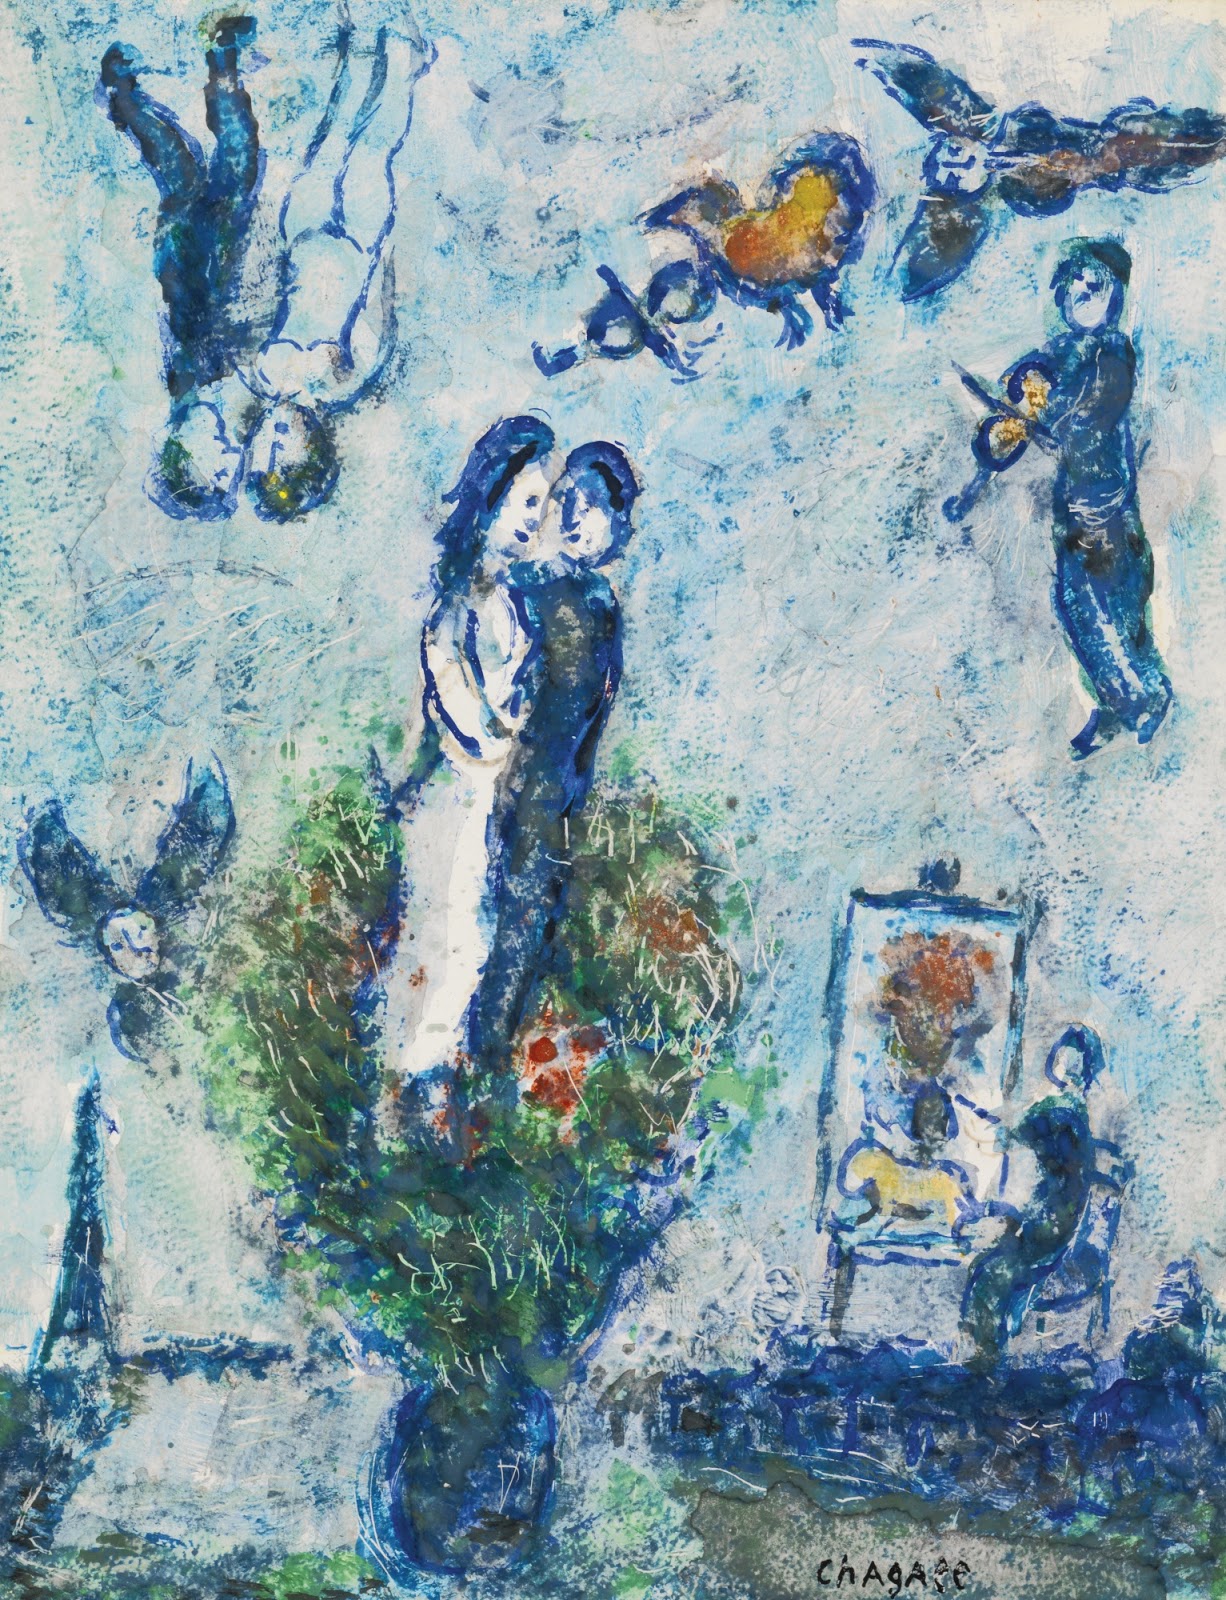 Marc+Chagall-1887-1985 (416).jpg